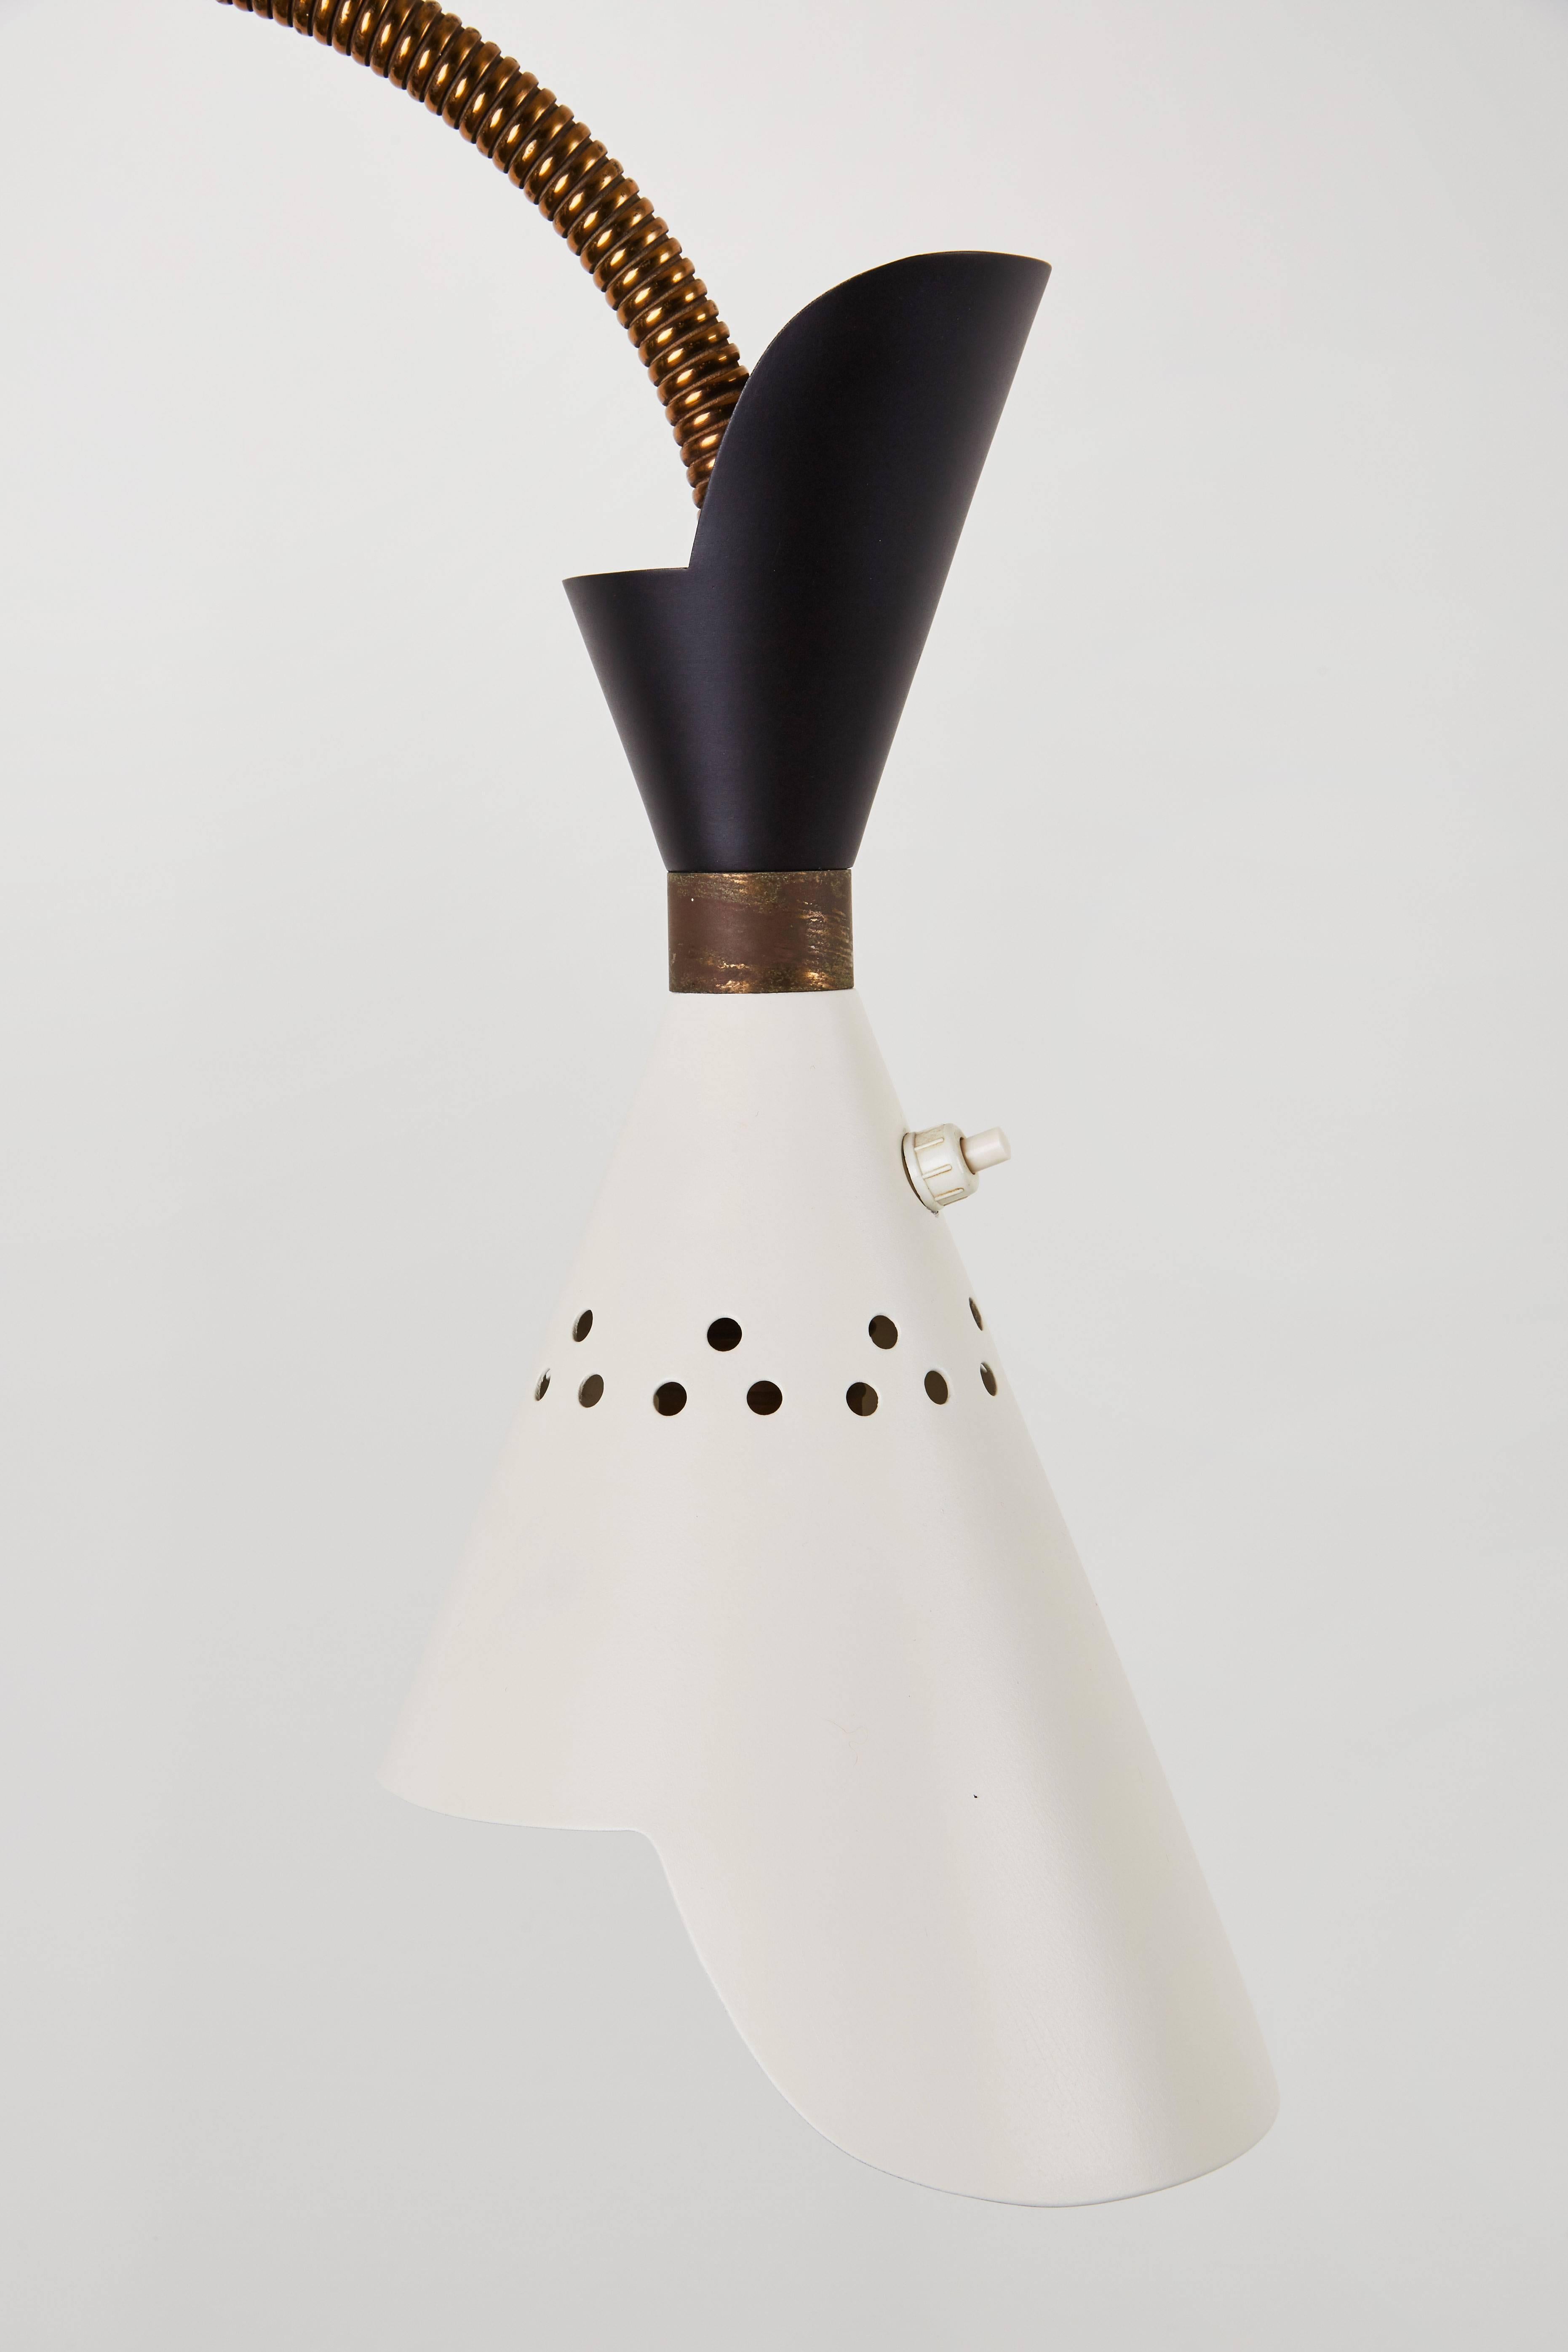 Mid-20th Century Italian Floor Lamp with Articulating Shade